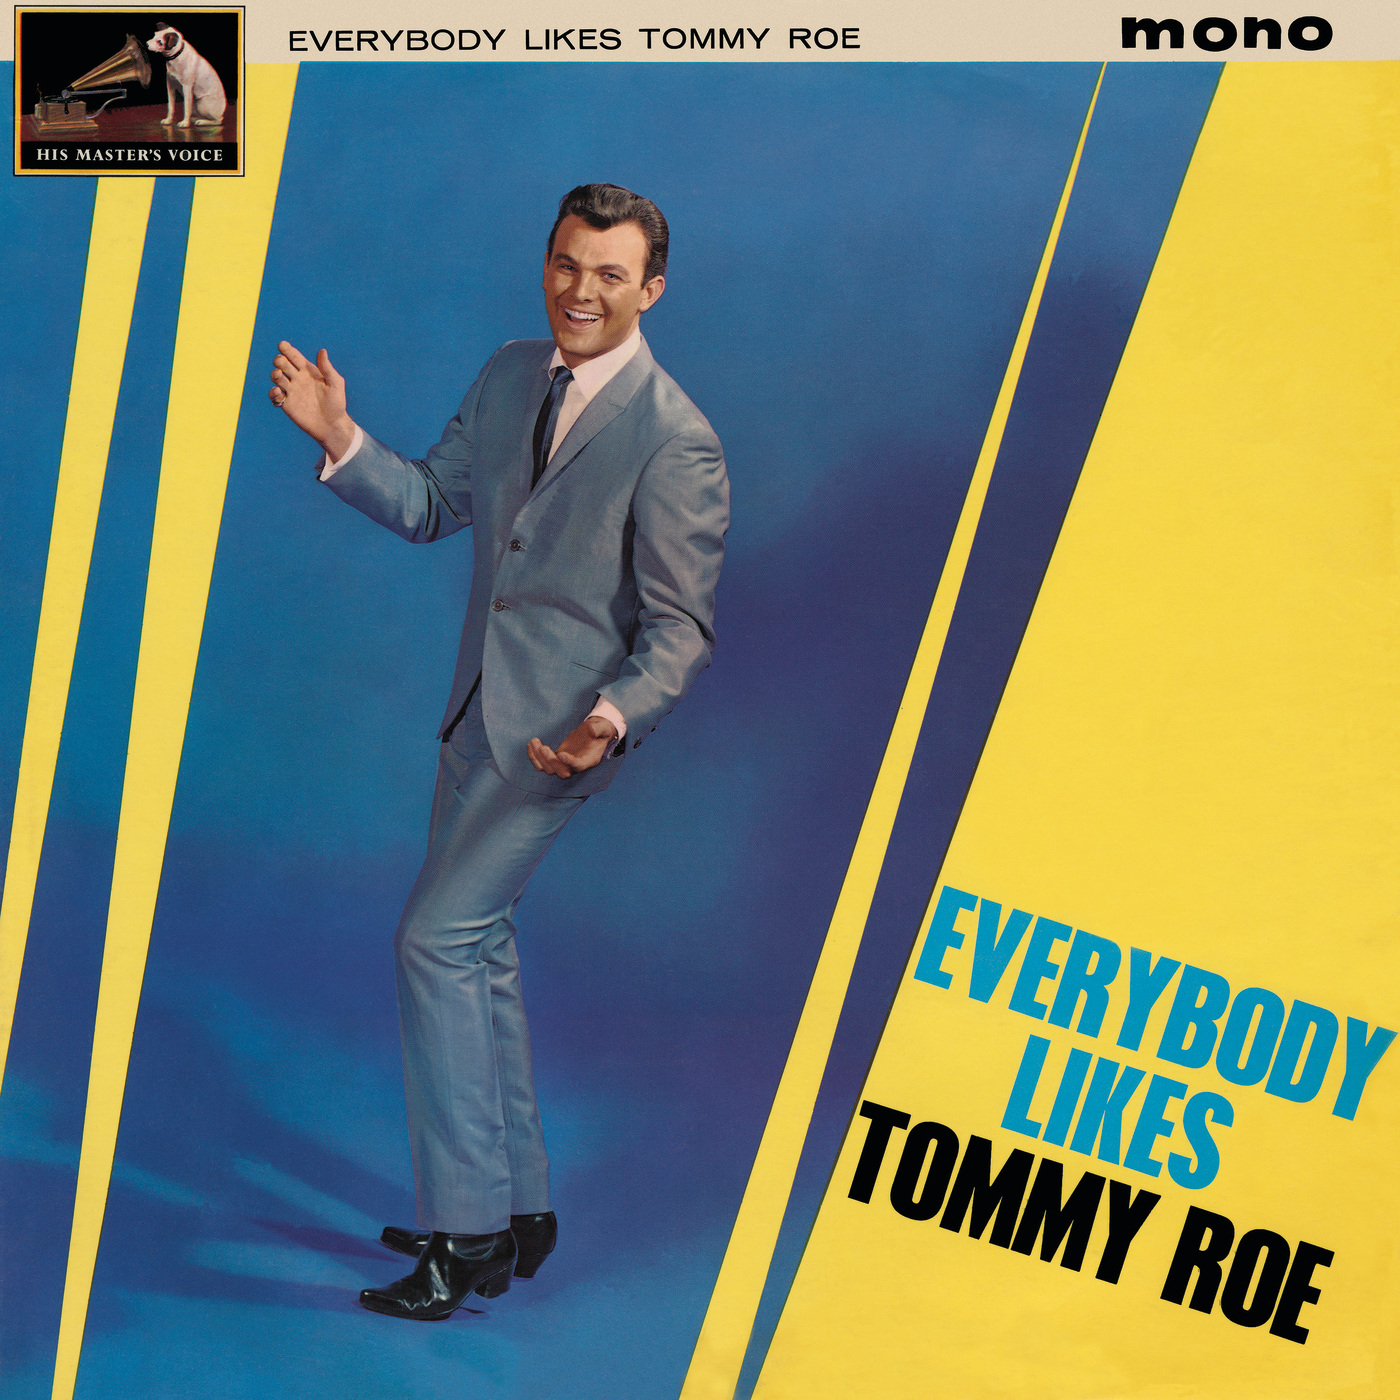 Everybody likes them. Tommy Roe. Everybody артист. Everybody likes. Everybody likes me.